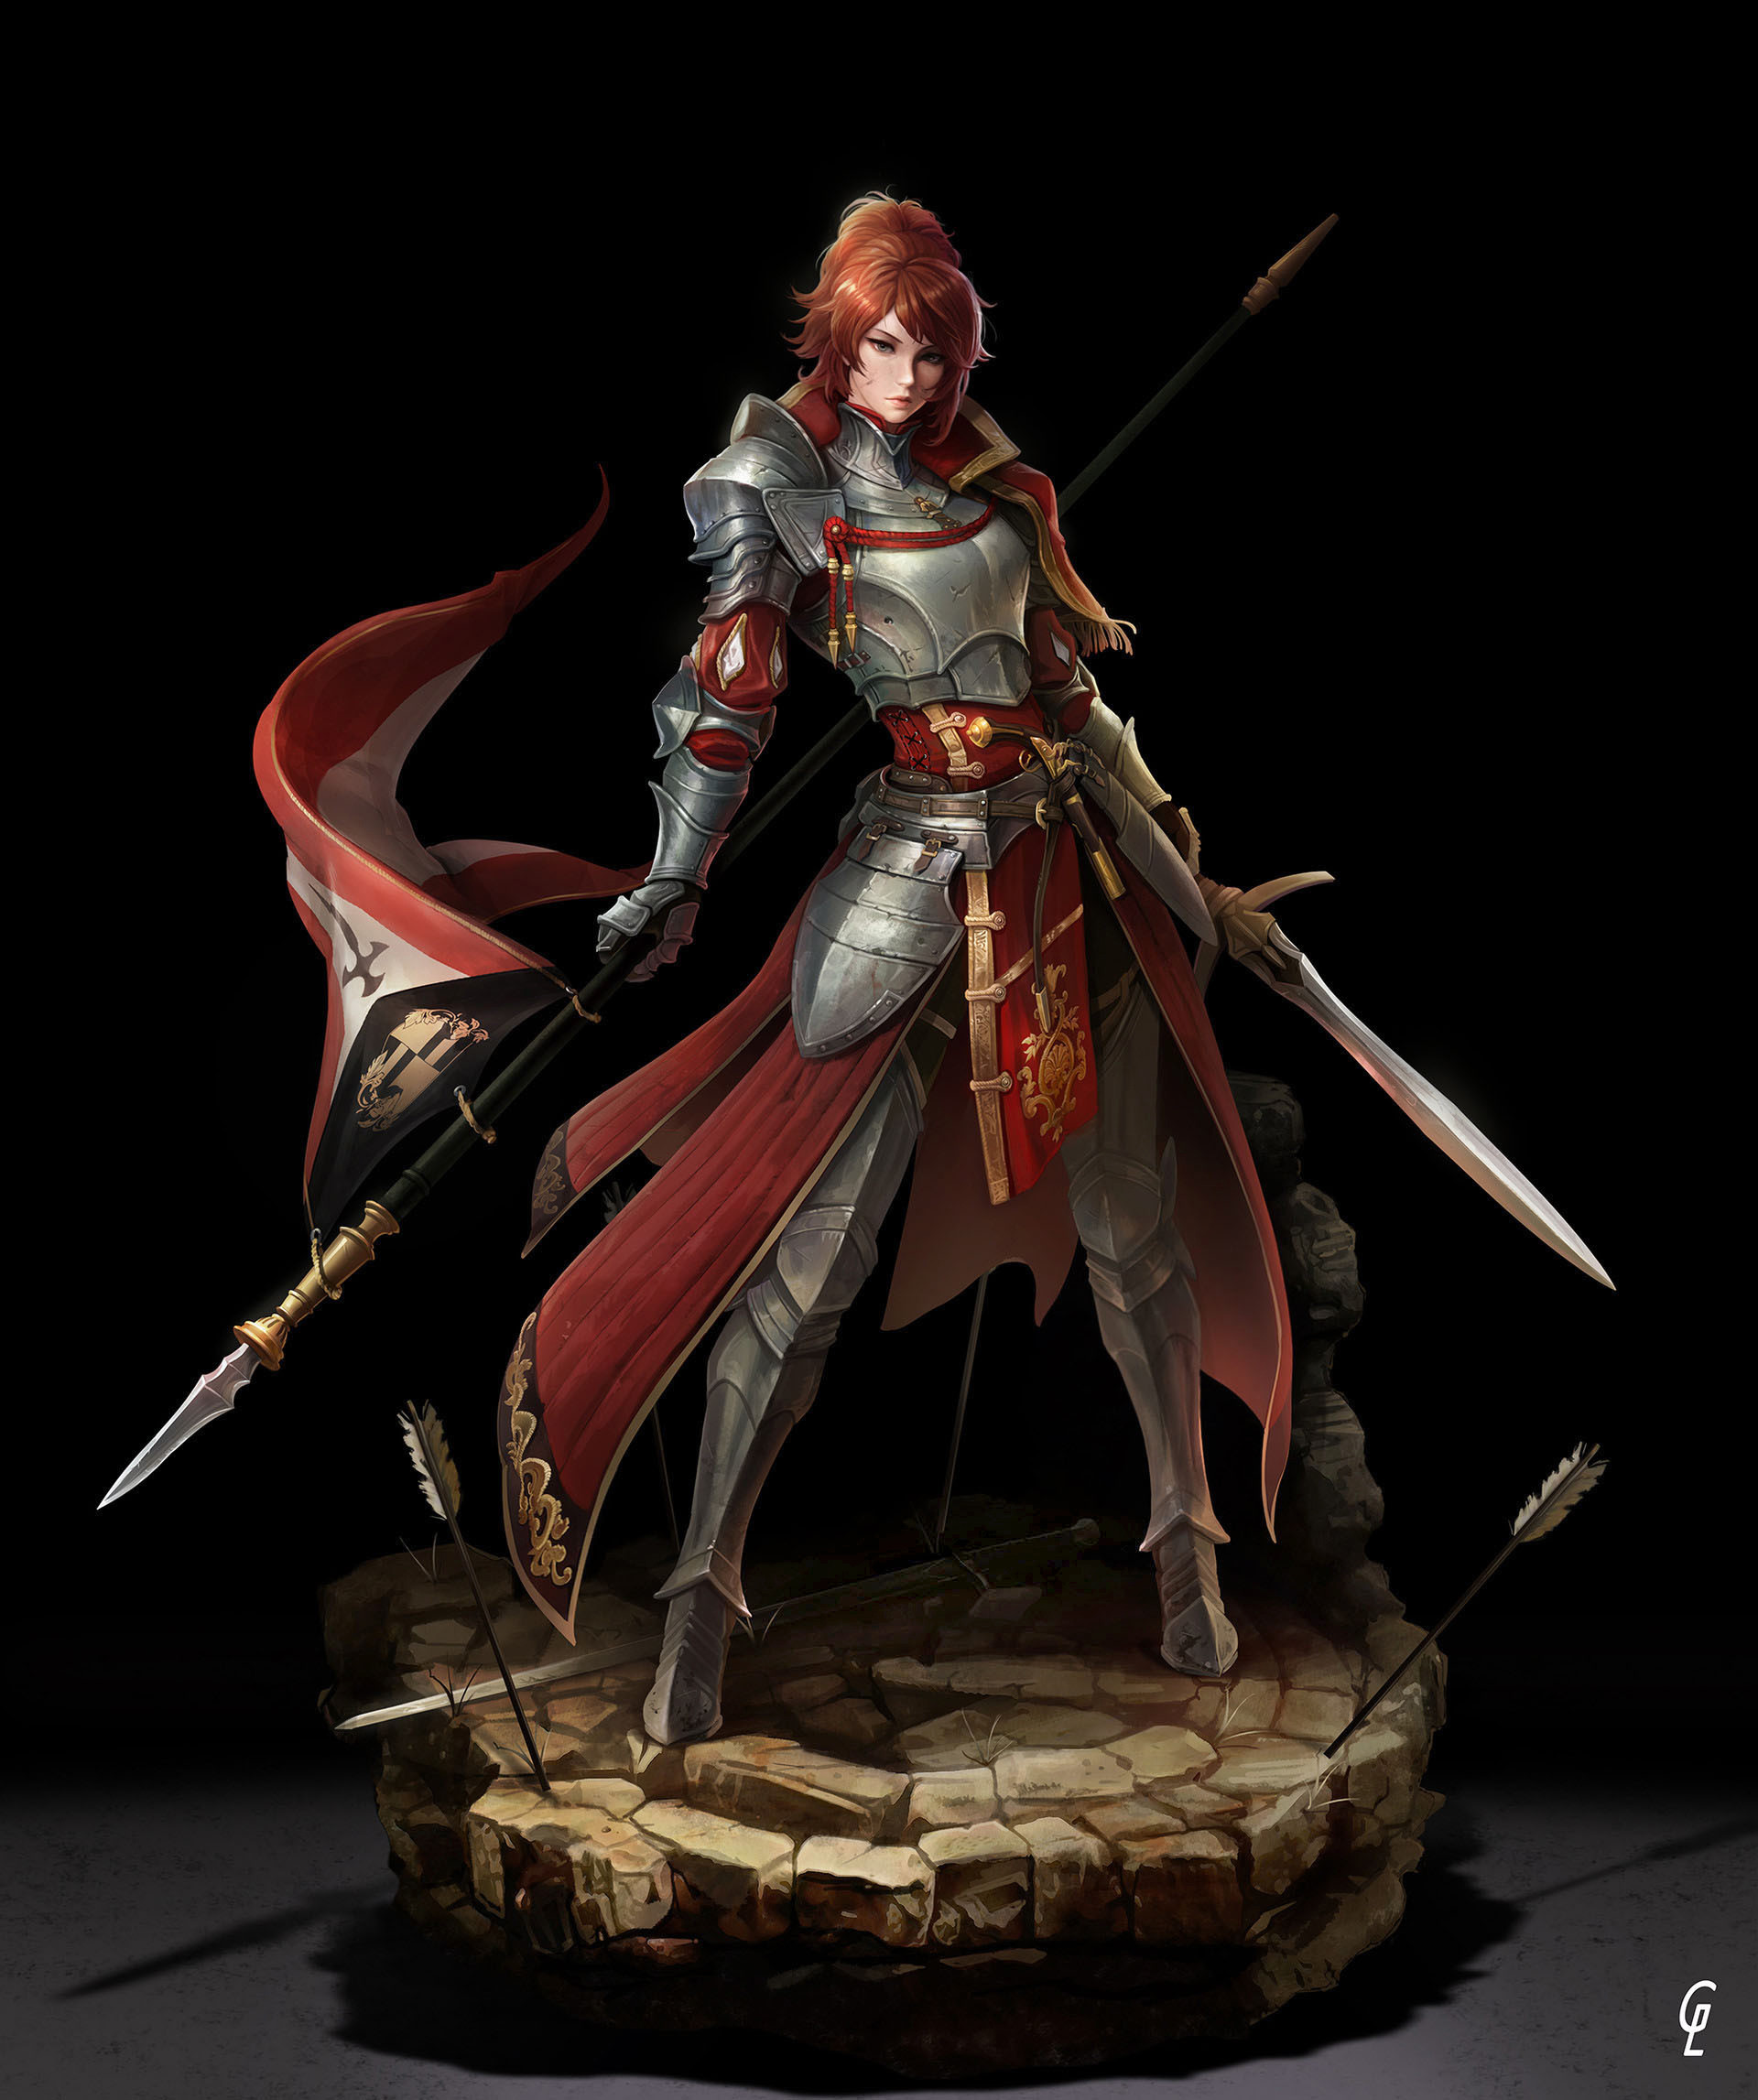 General 1920x2294 Park JunKyu drawing women redhead ponytail warrior armor weapon spear sword arrows steel red clothing skirt black